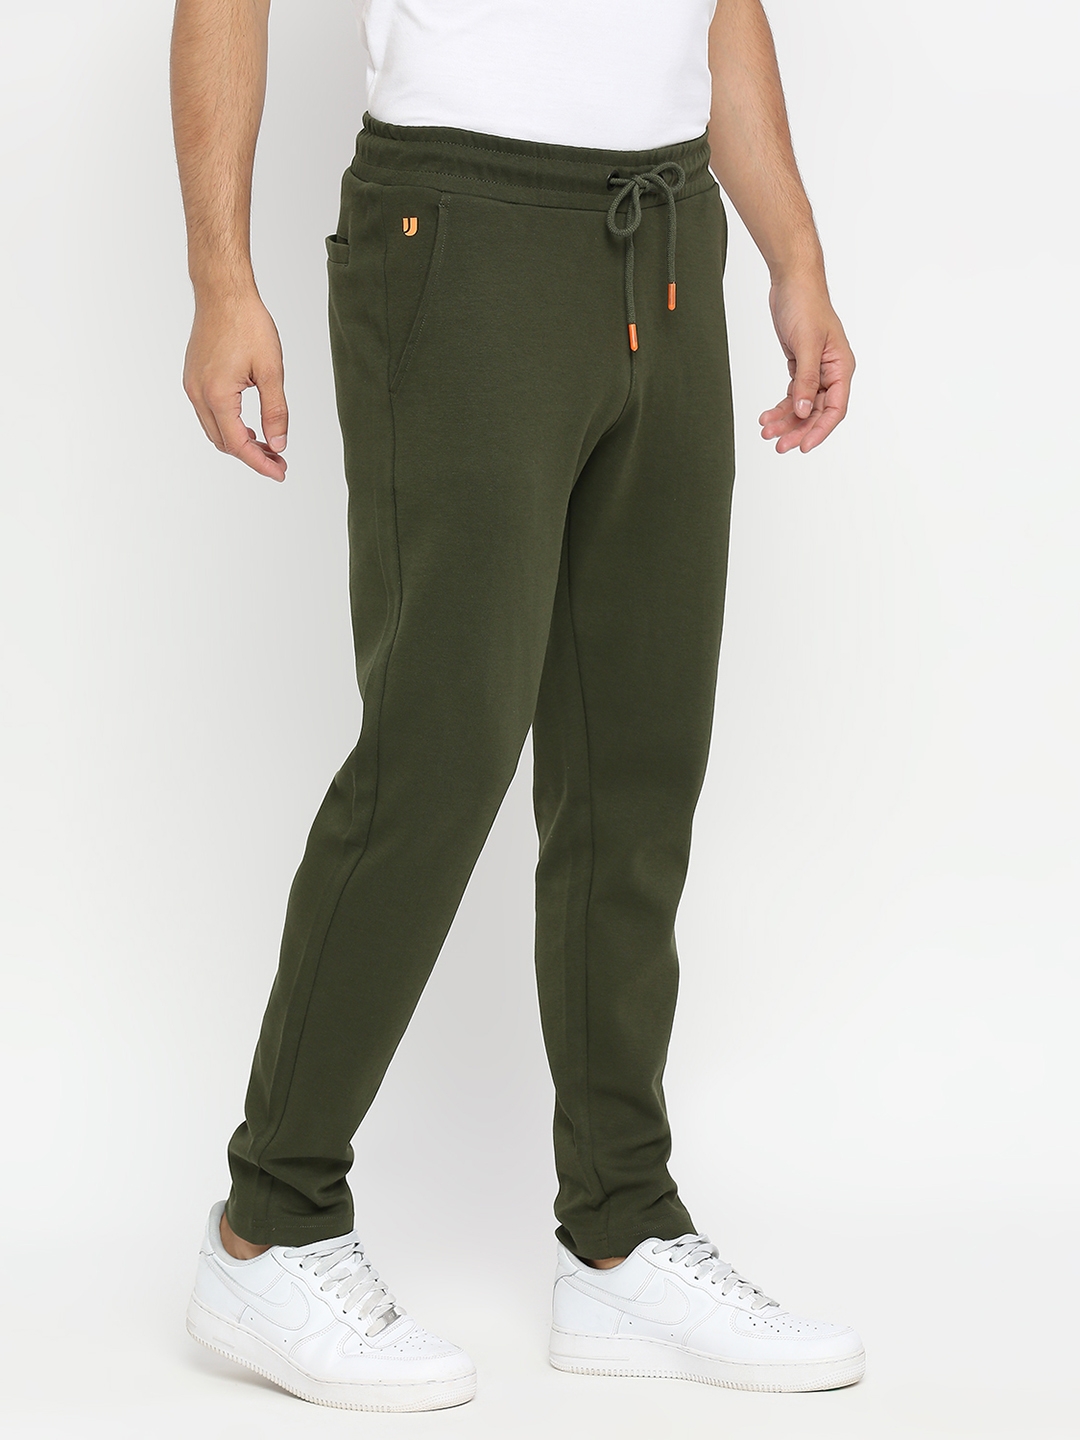 Underjeans by Spykar Men Knitted Rifle Green Cotton Pyjama